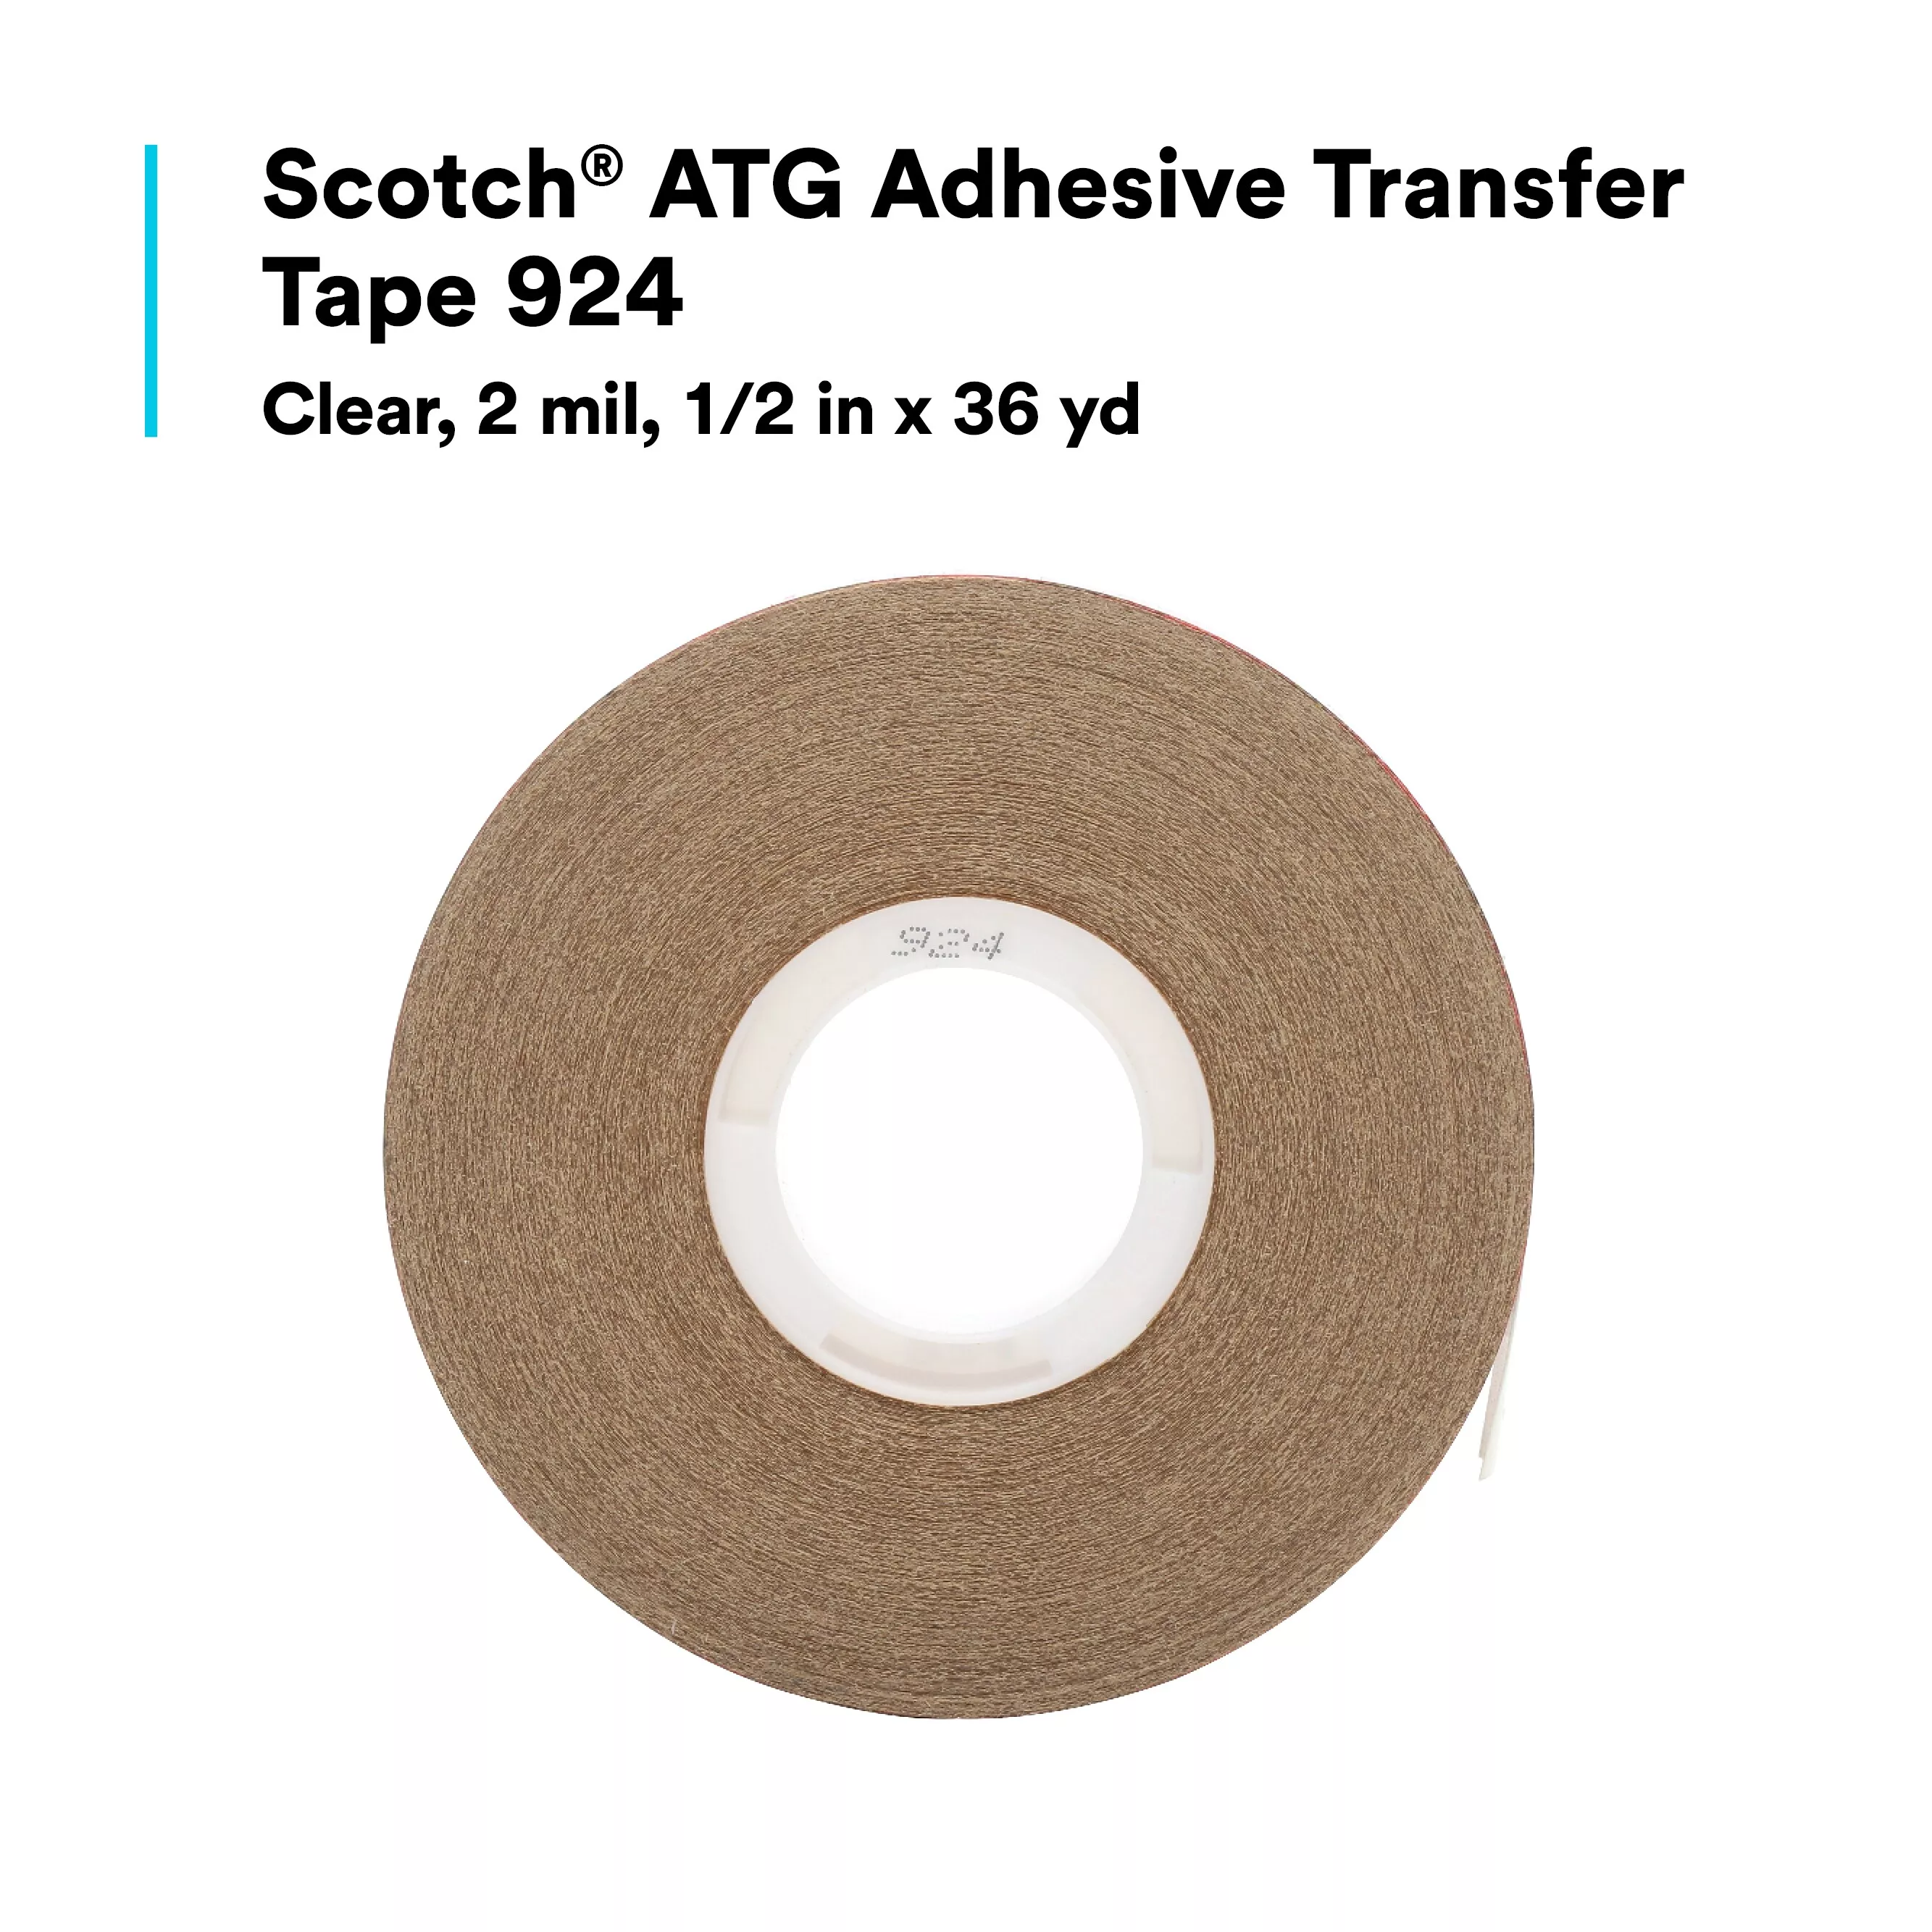 SKU 7100137416 | Scotch® ATG Adhesive Transfer Tape 924